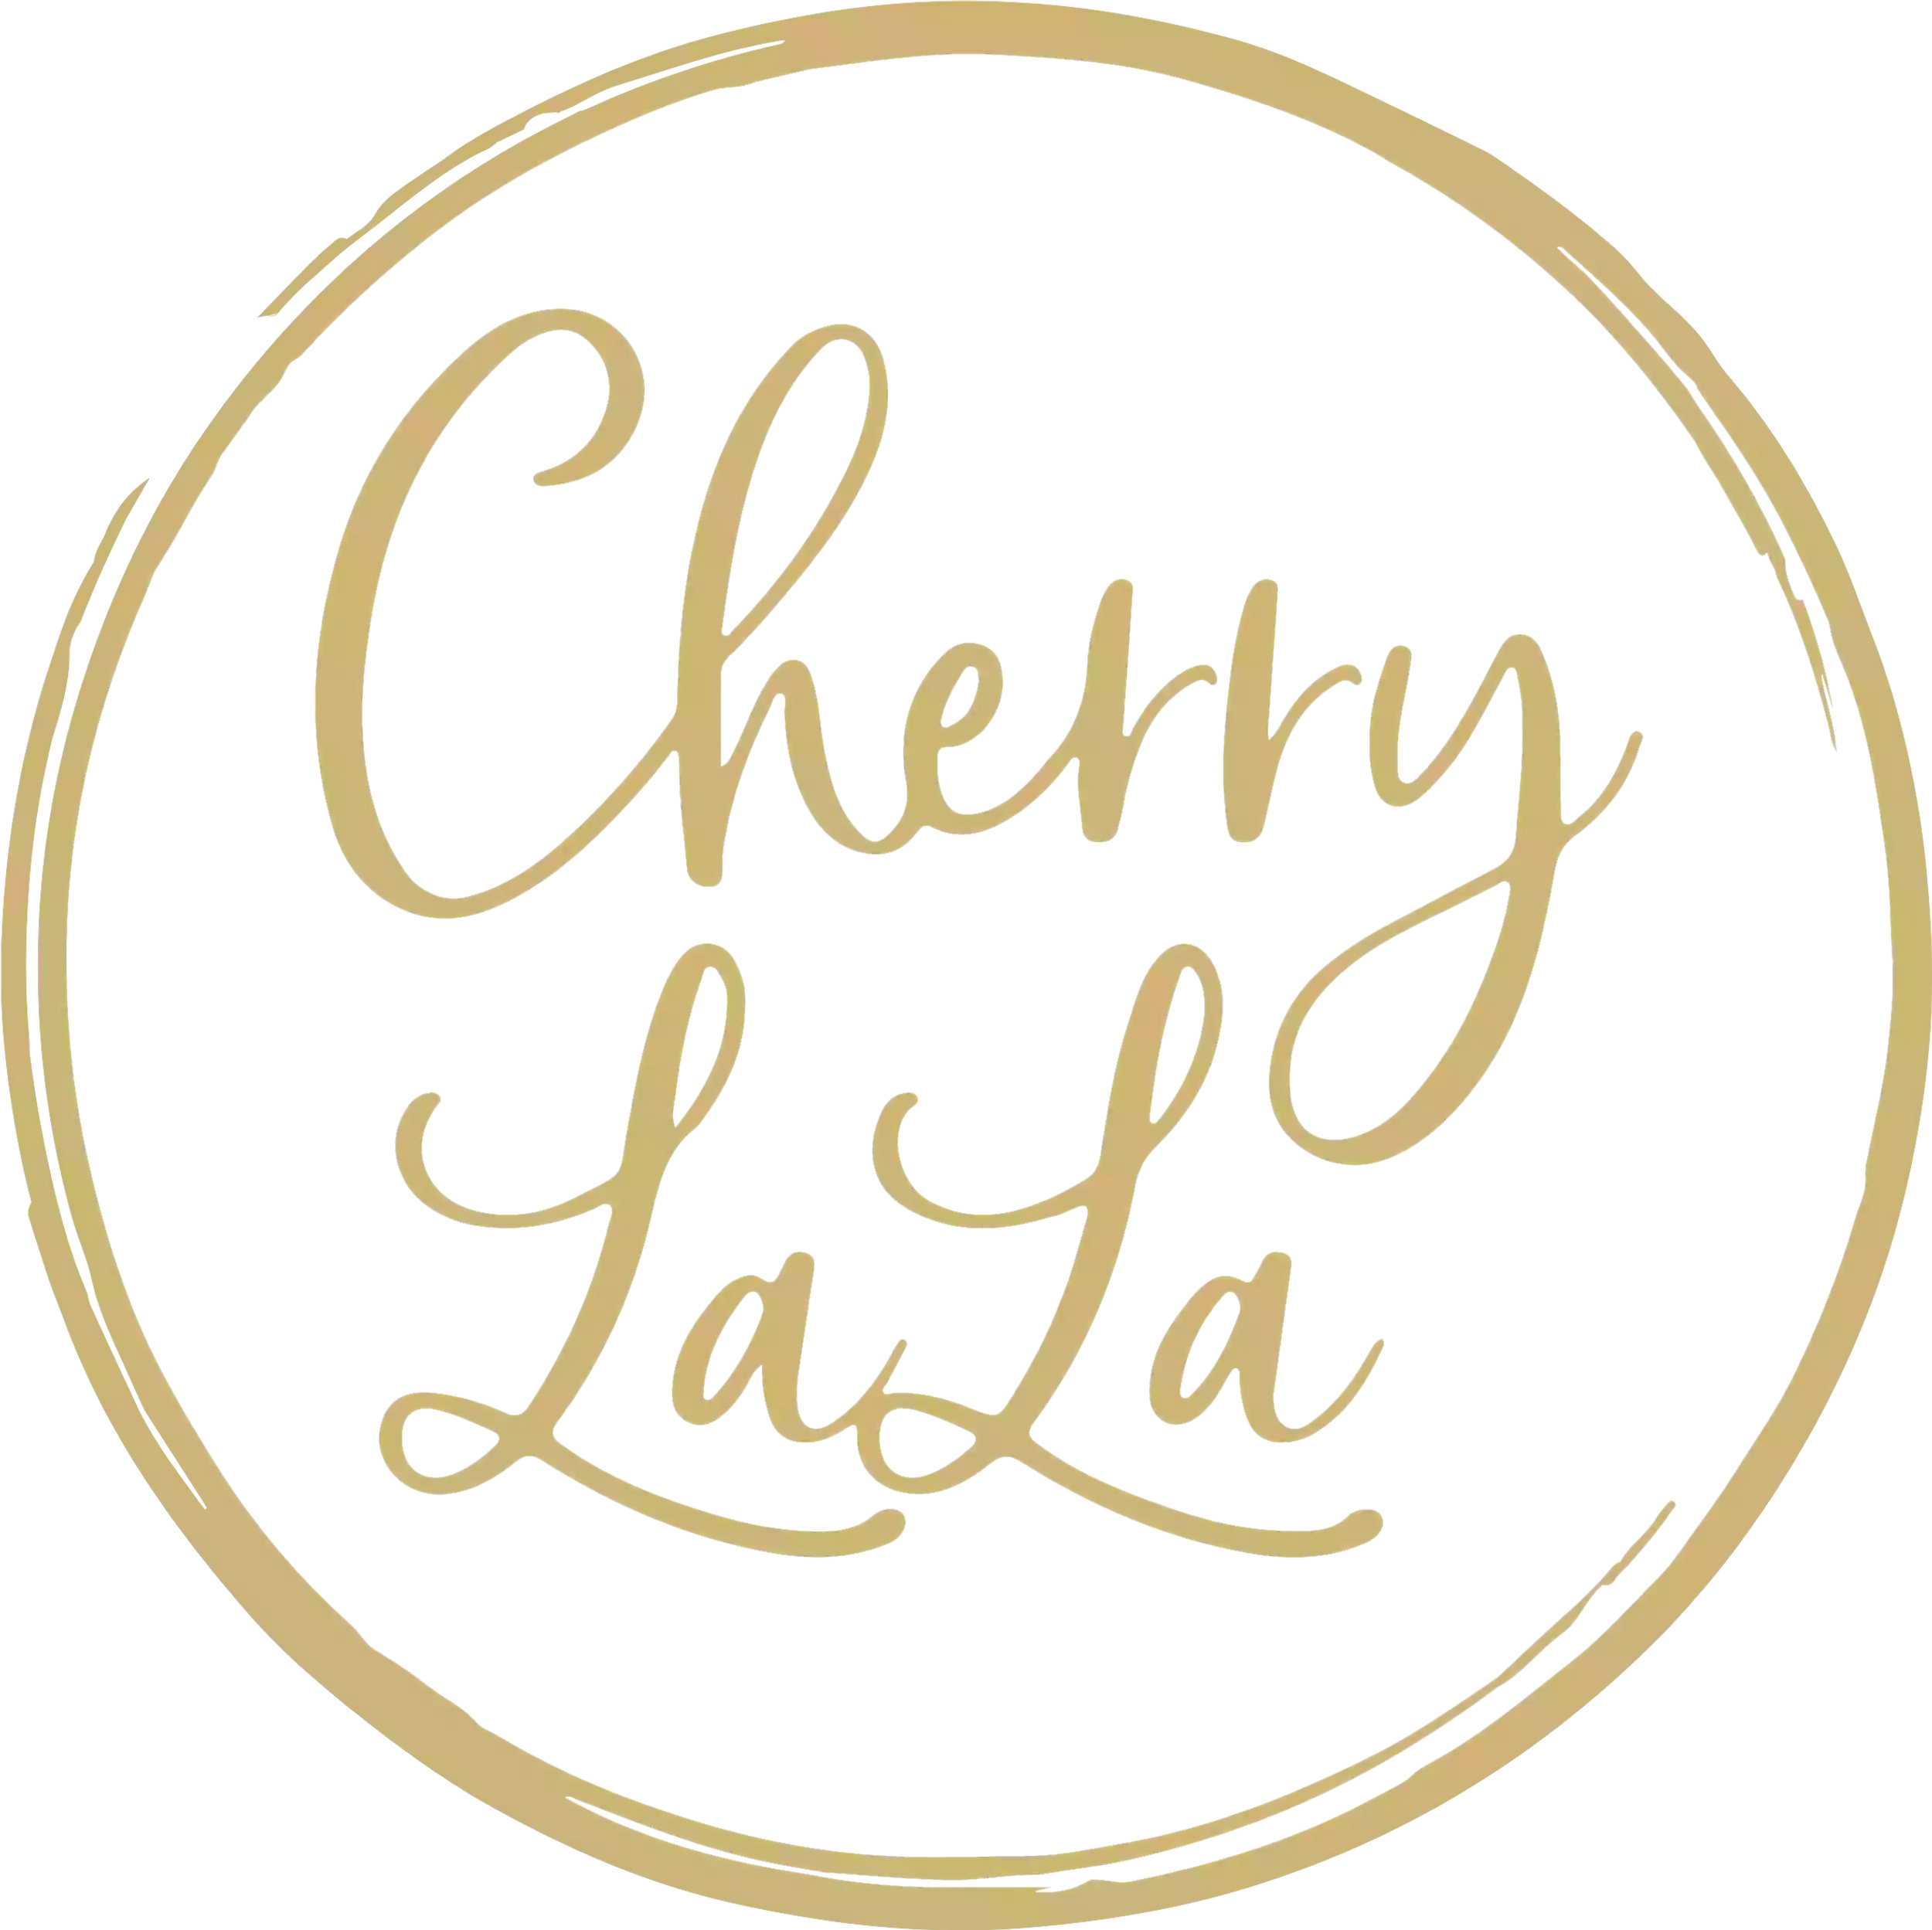 Cherry LaLa